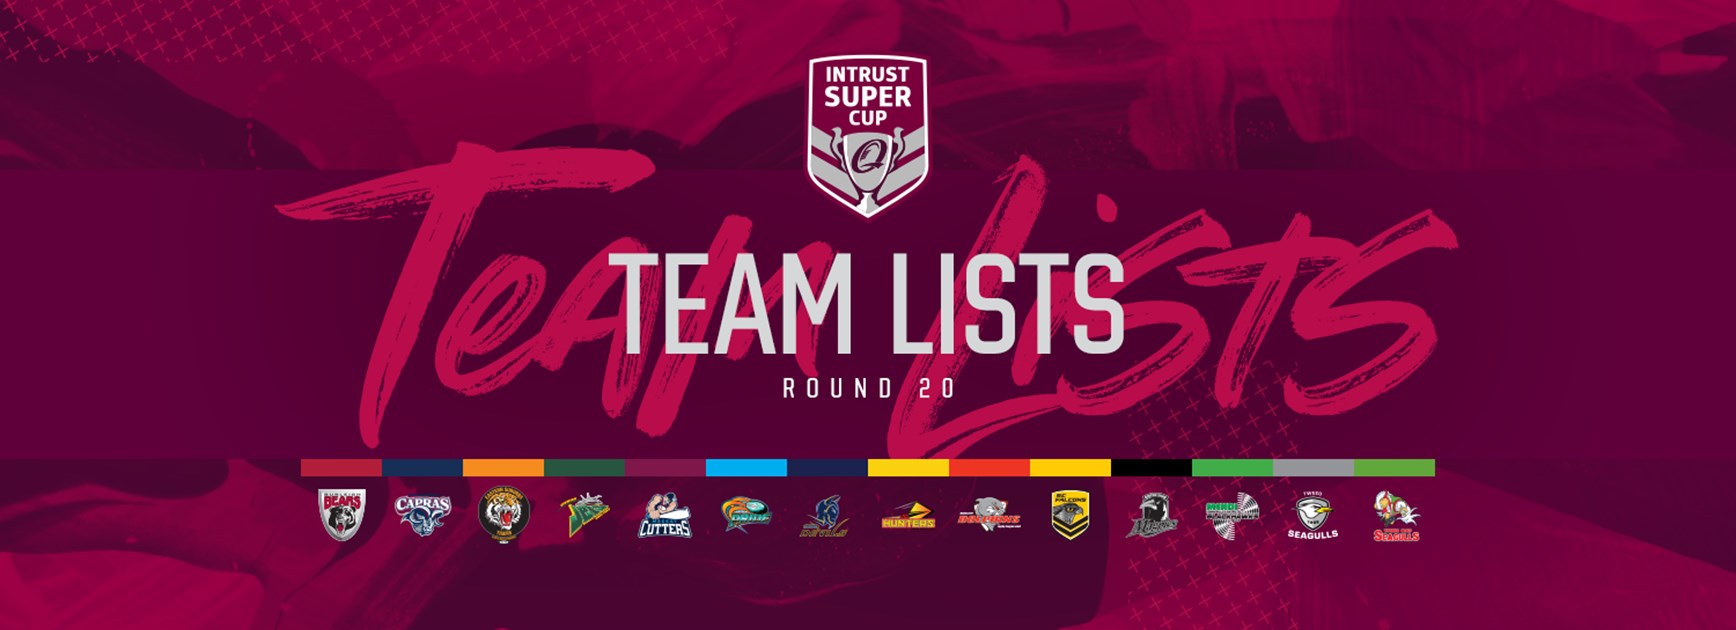 Intrust Super Cup Round 20 team lists